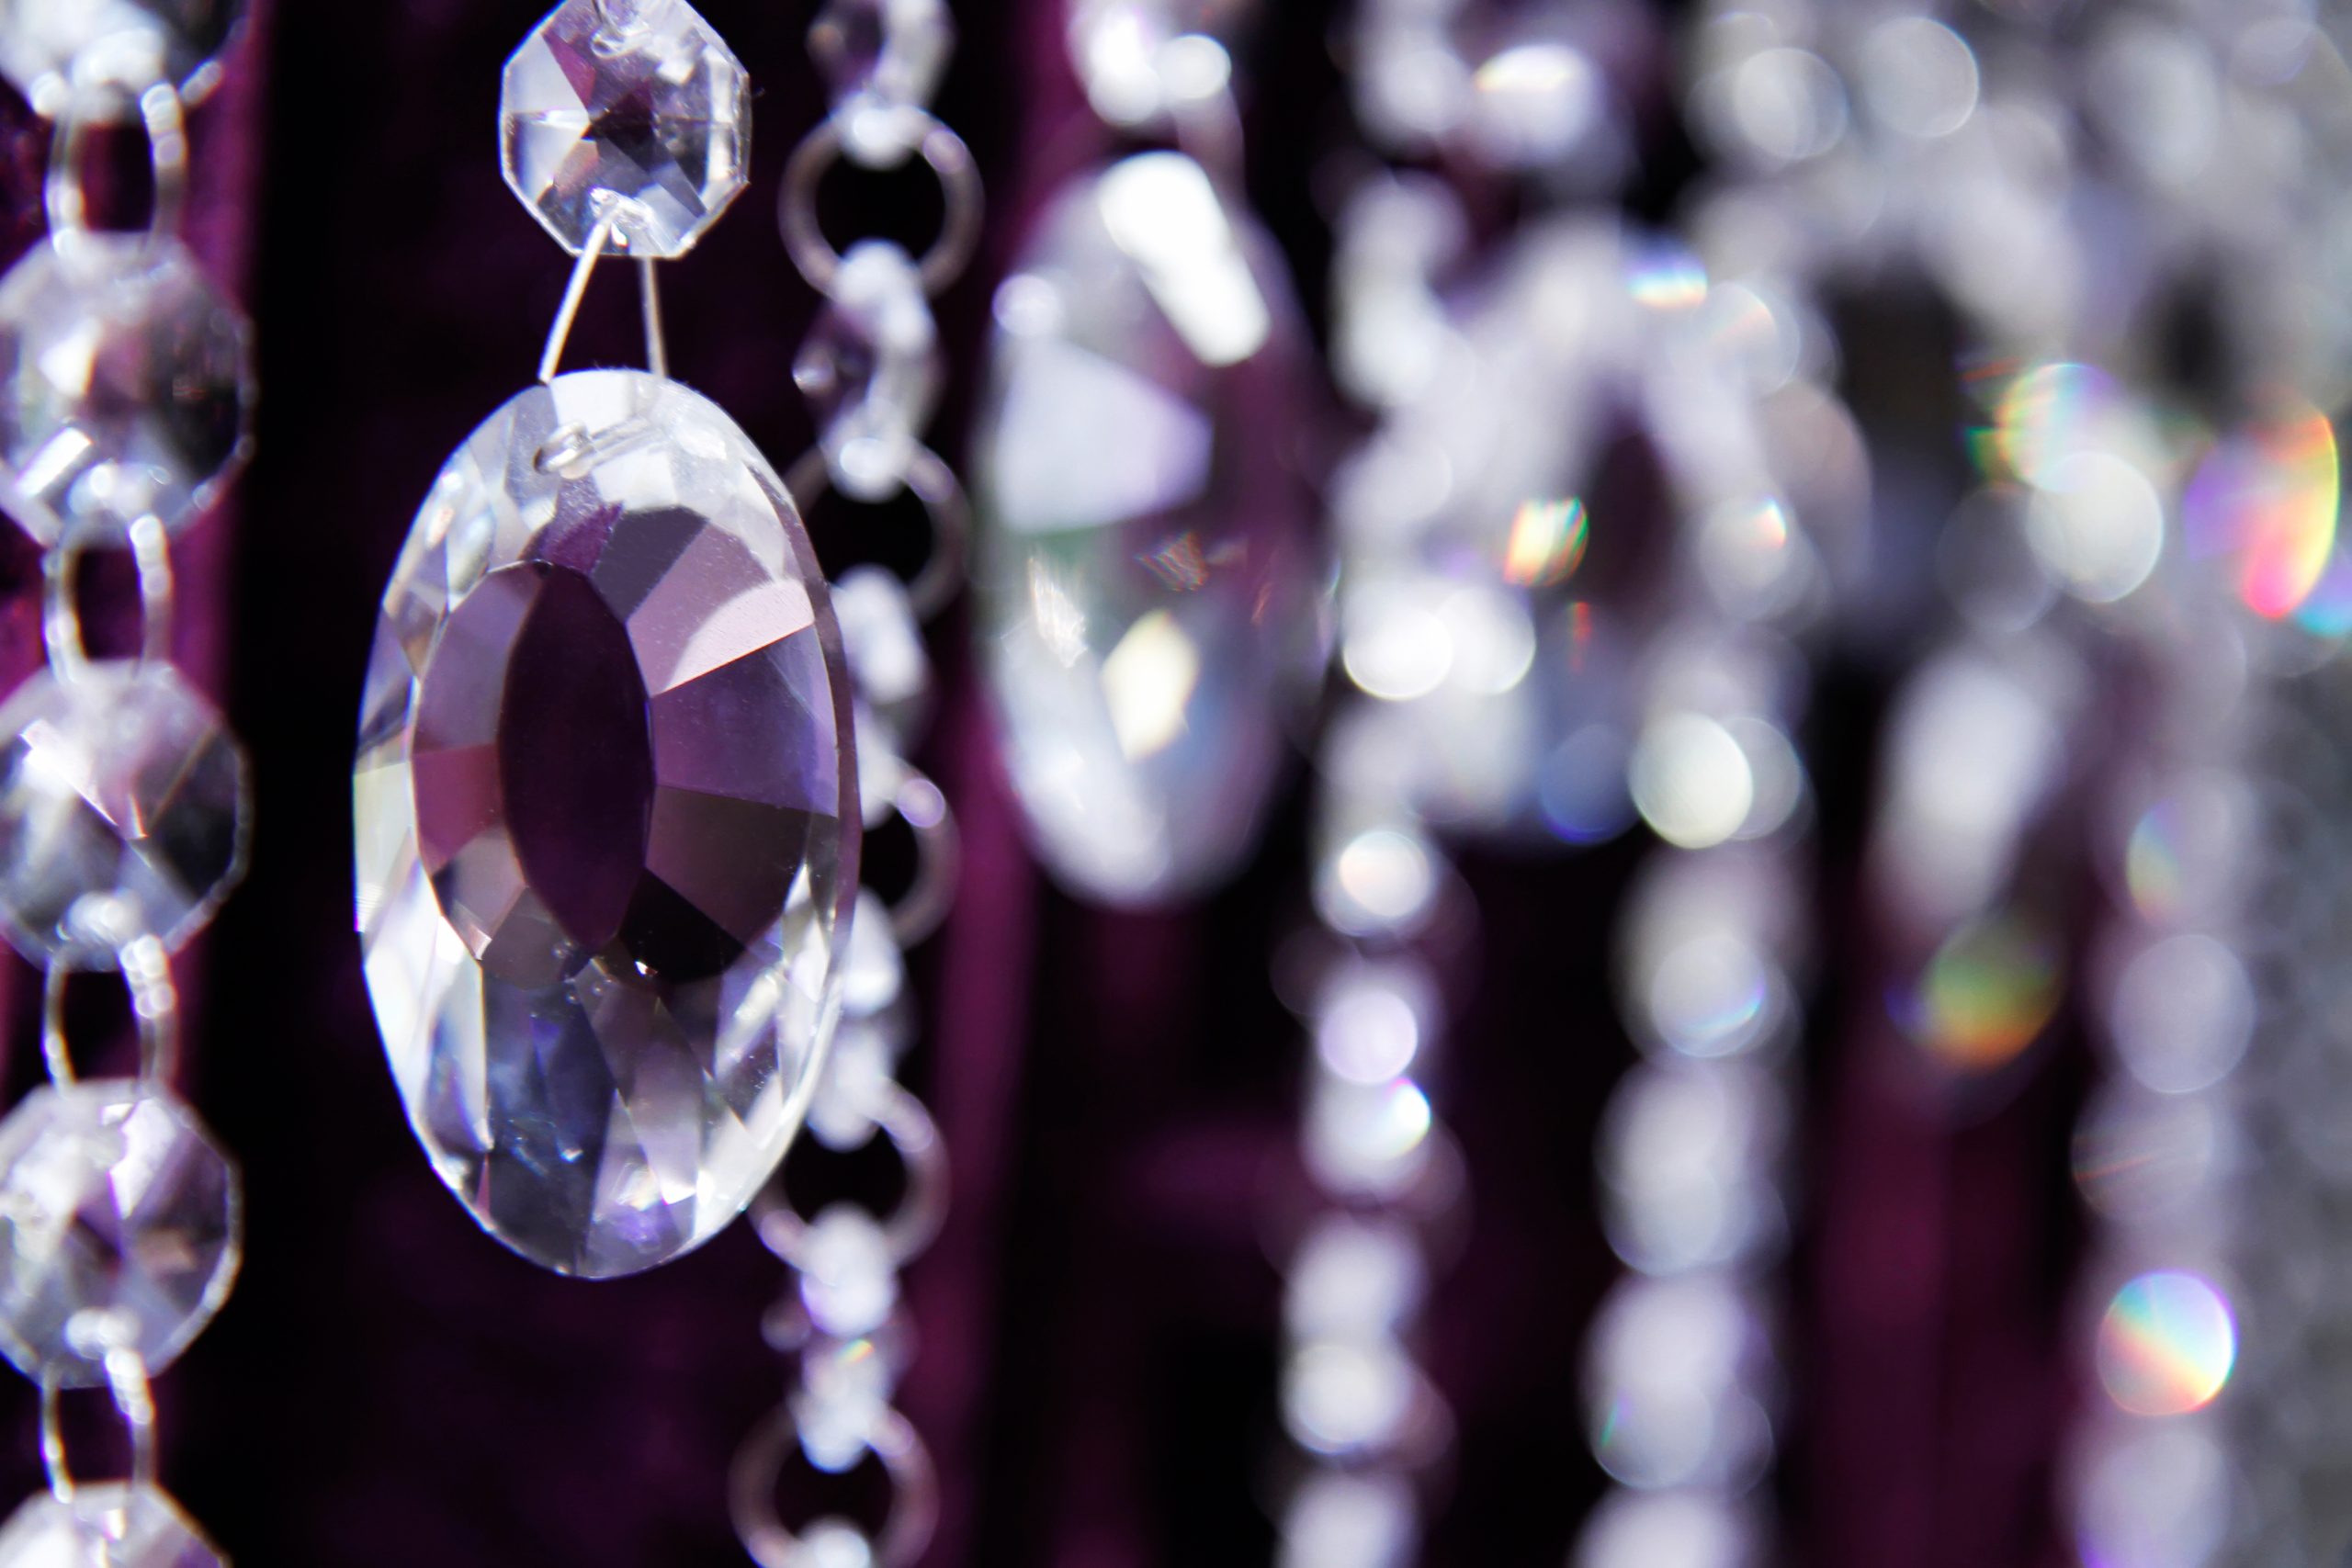 Swarovski Crystal Beads: The Sparkle That Transcends Time